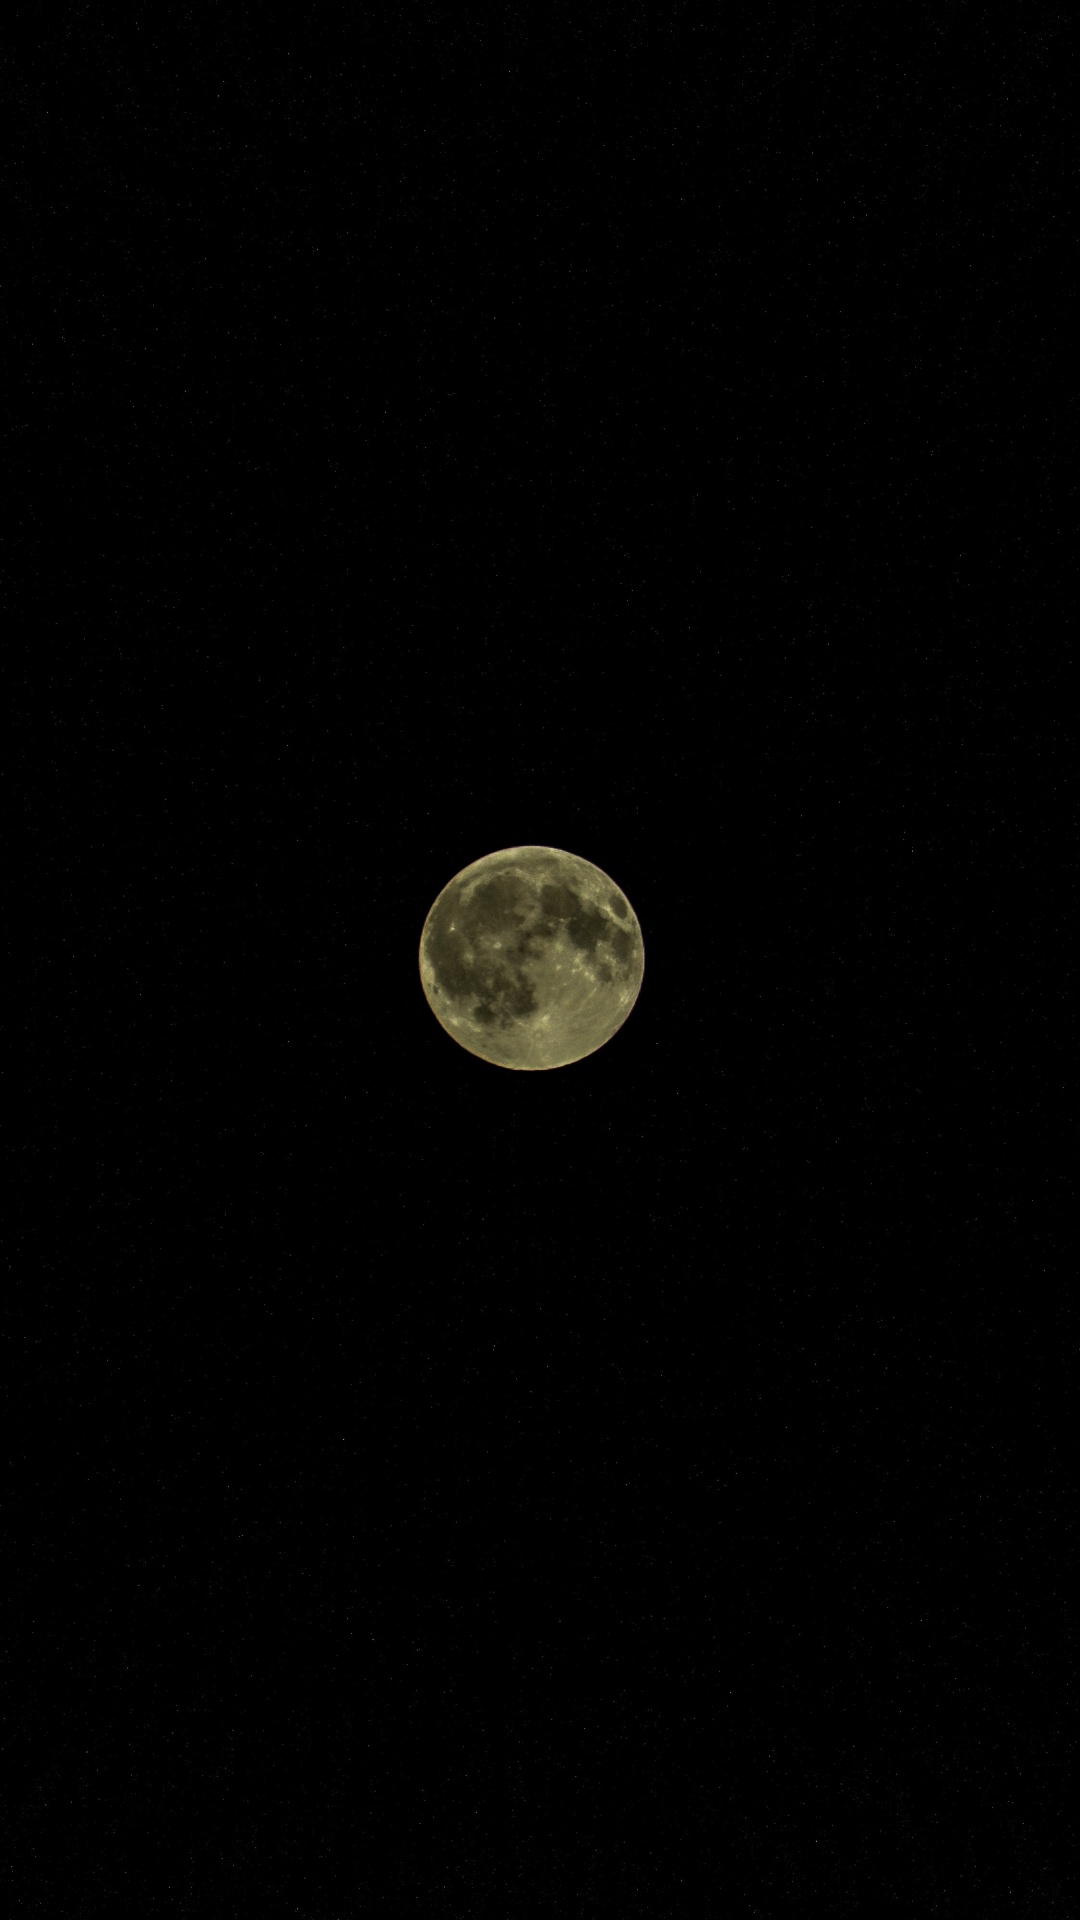 Full Moon in The Night Sky. Wallpaper in 1080x1920 Resolution